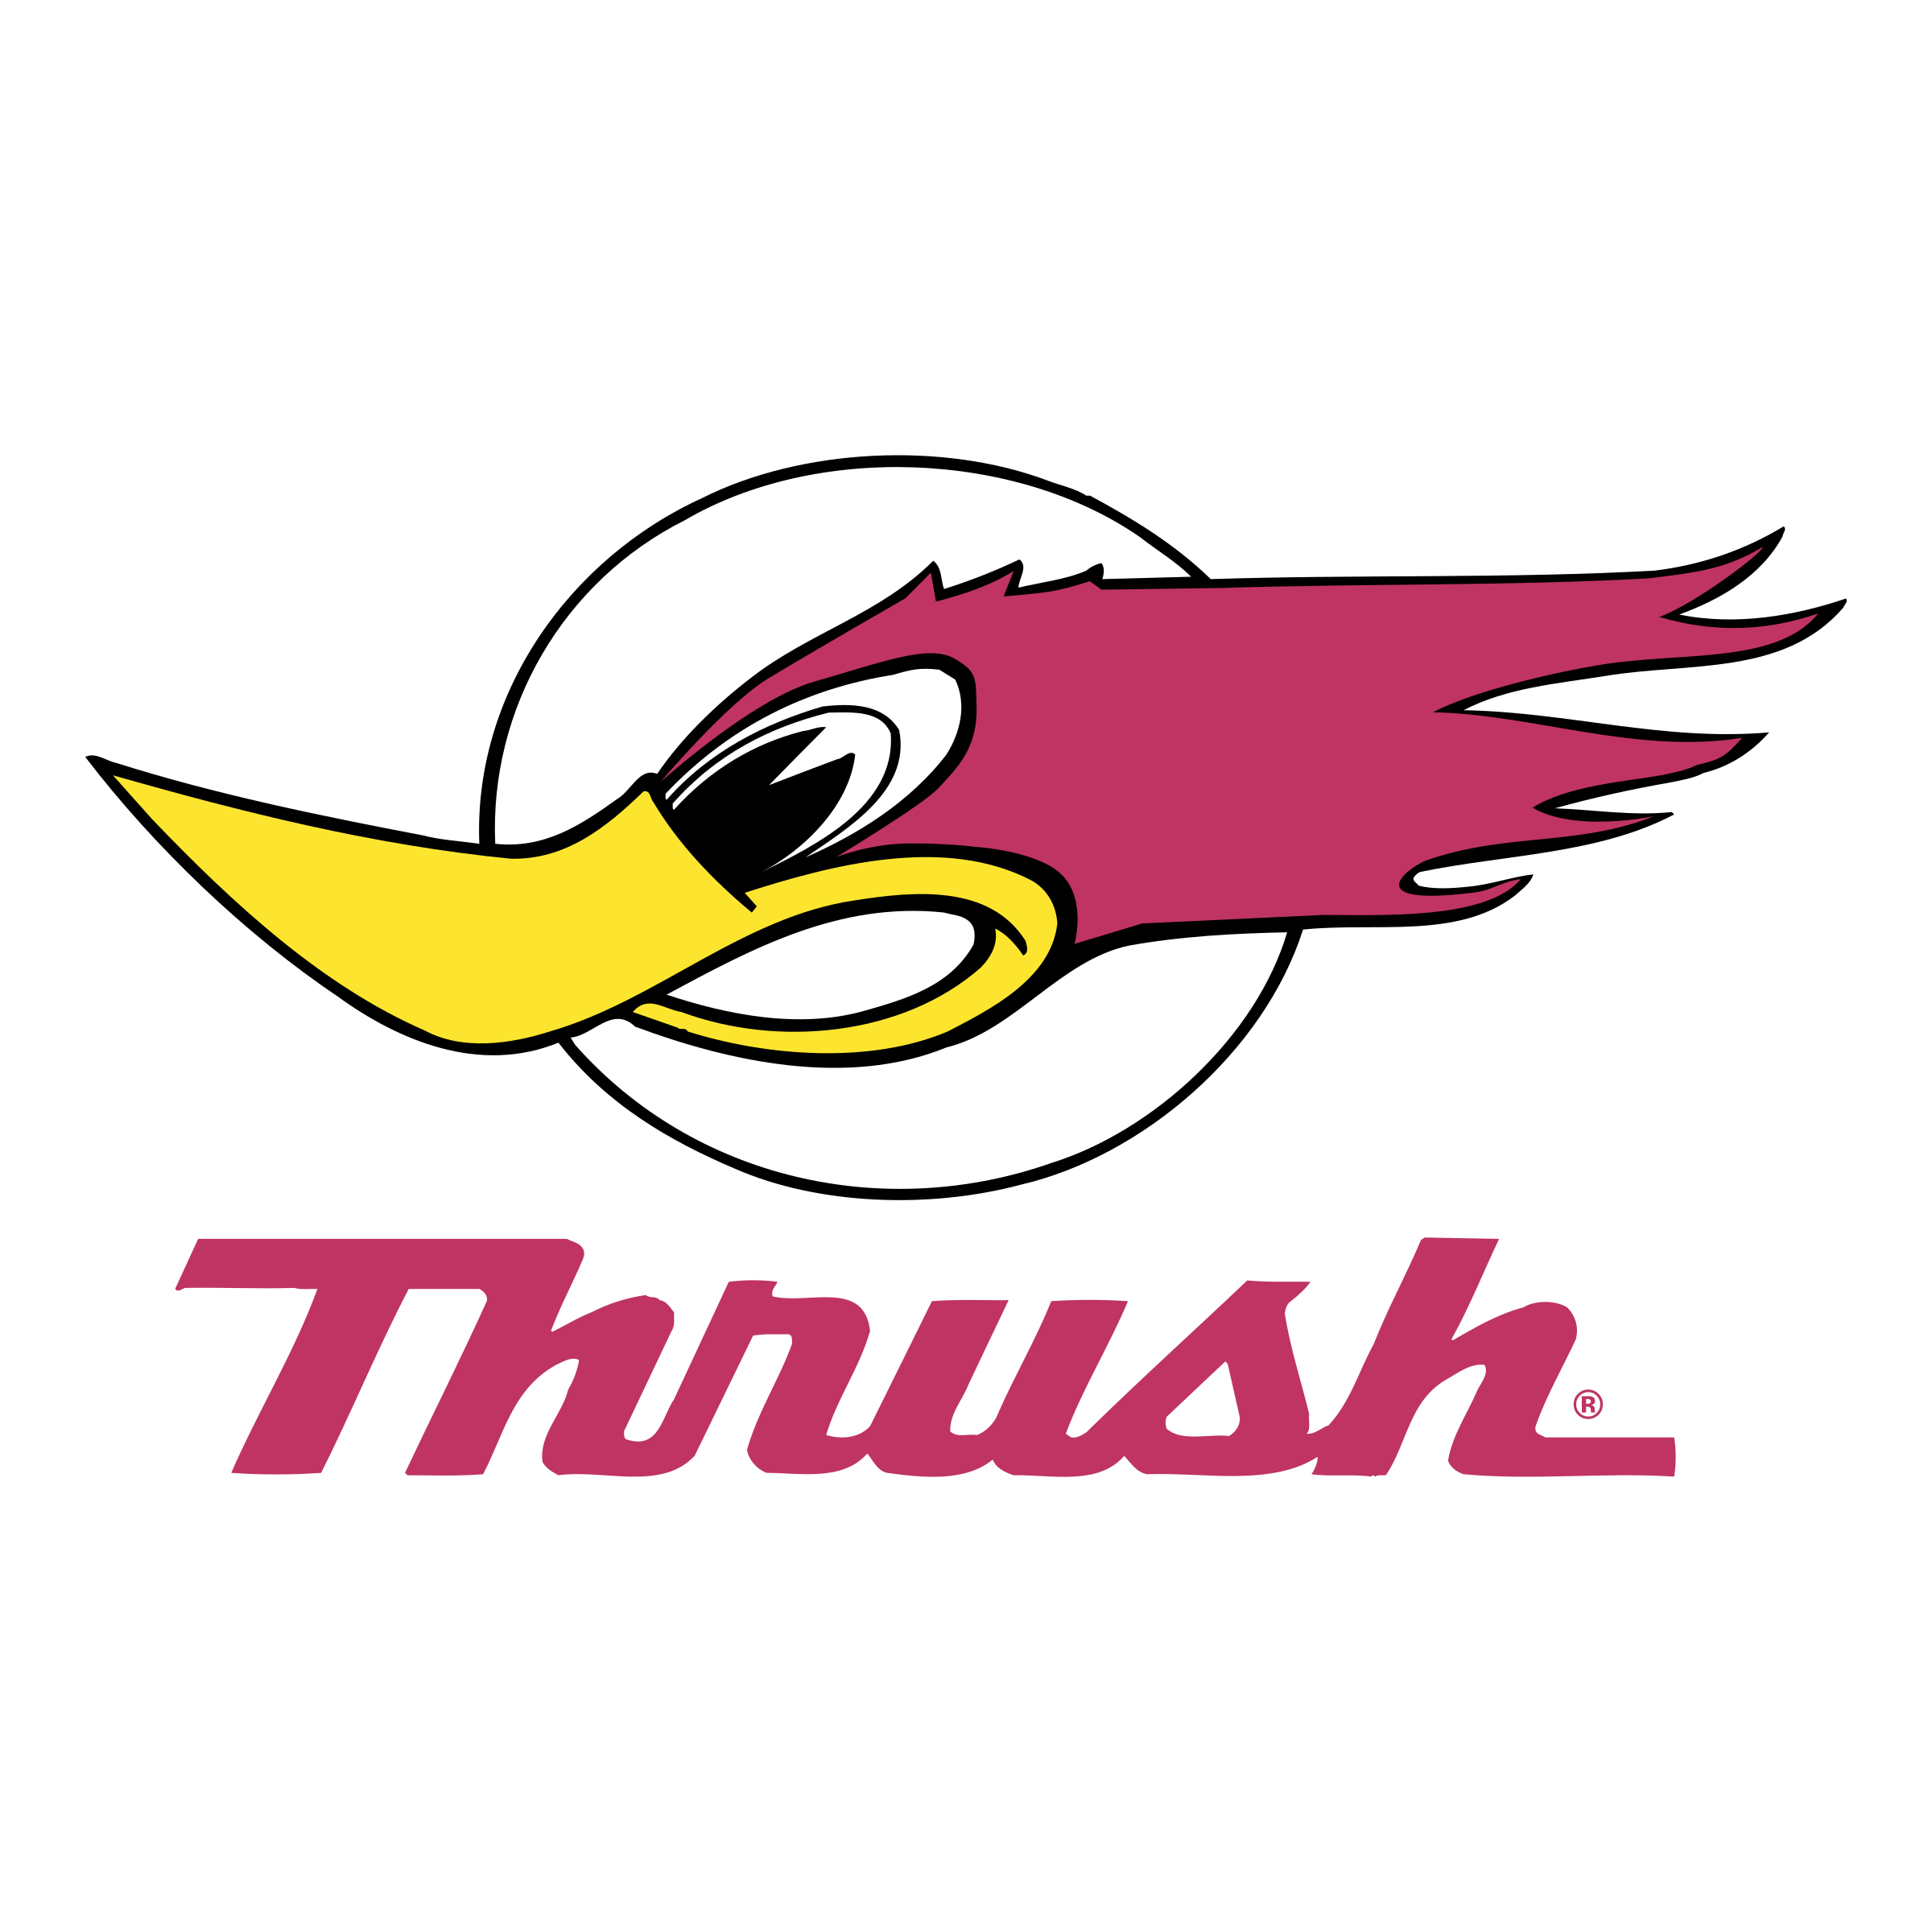 Thrush Logo - Thrush Logo PNG Transparent & SVG Vector